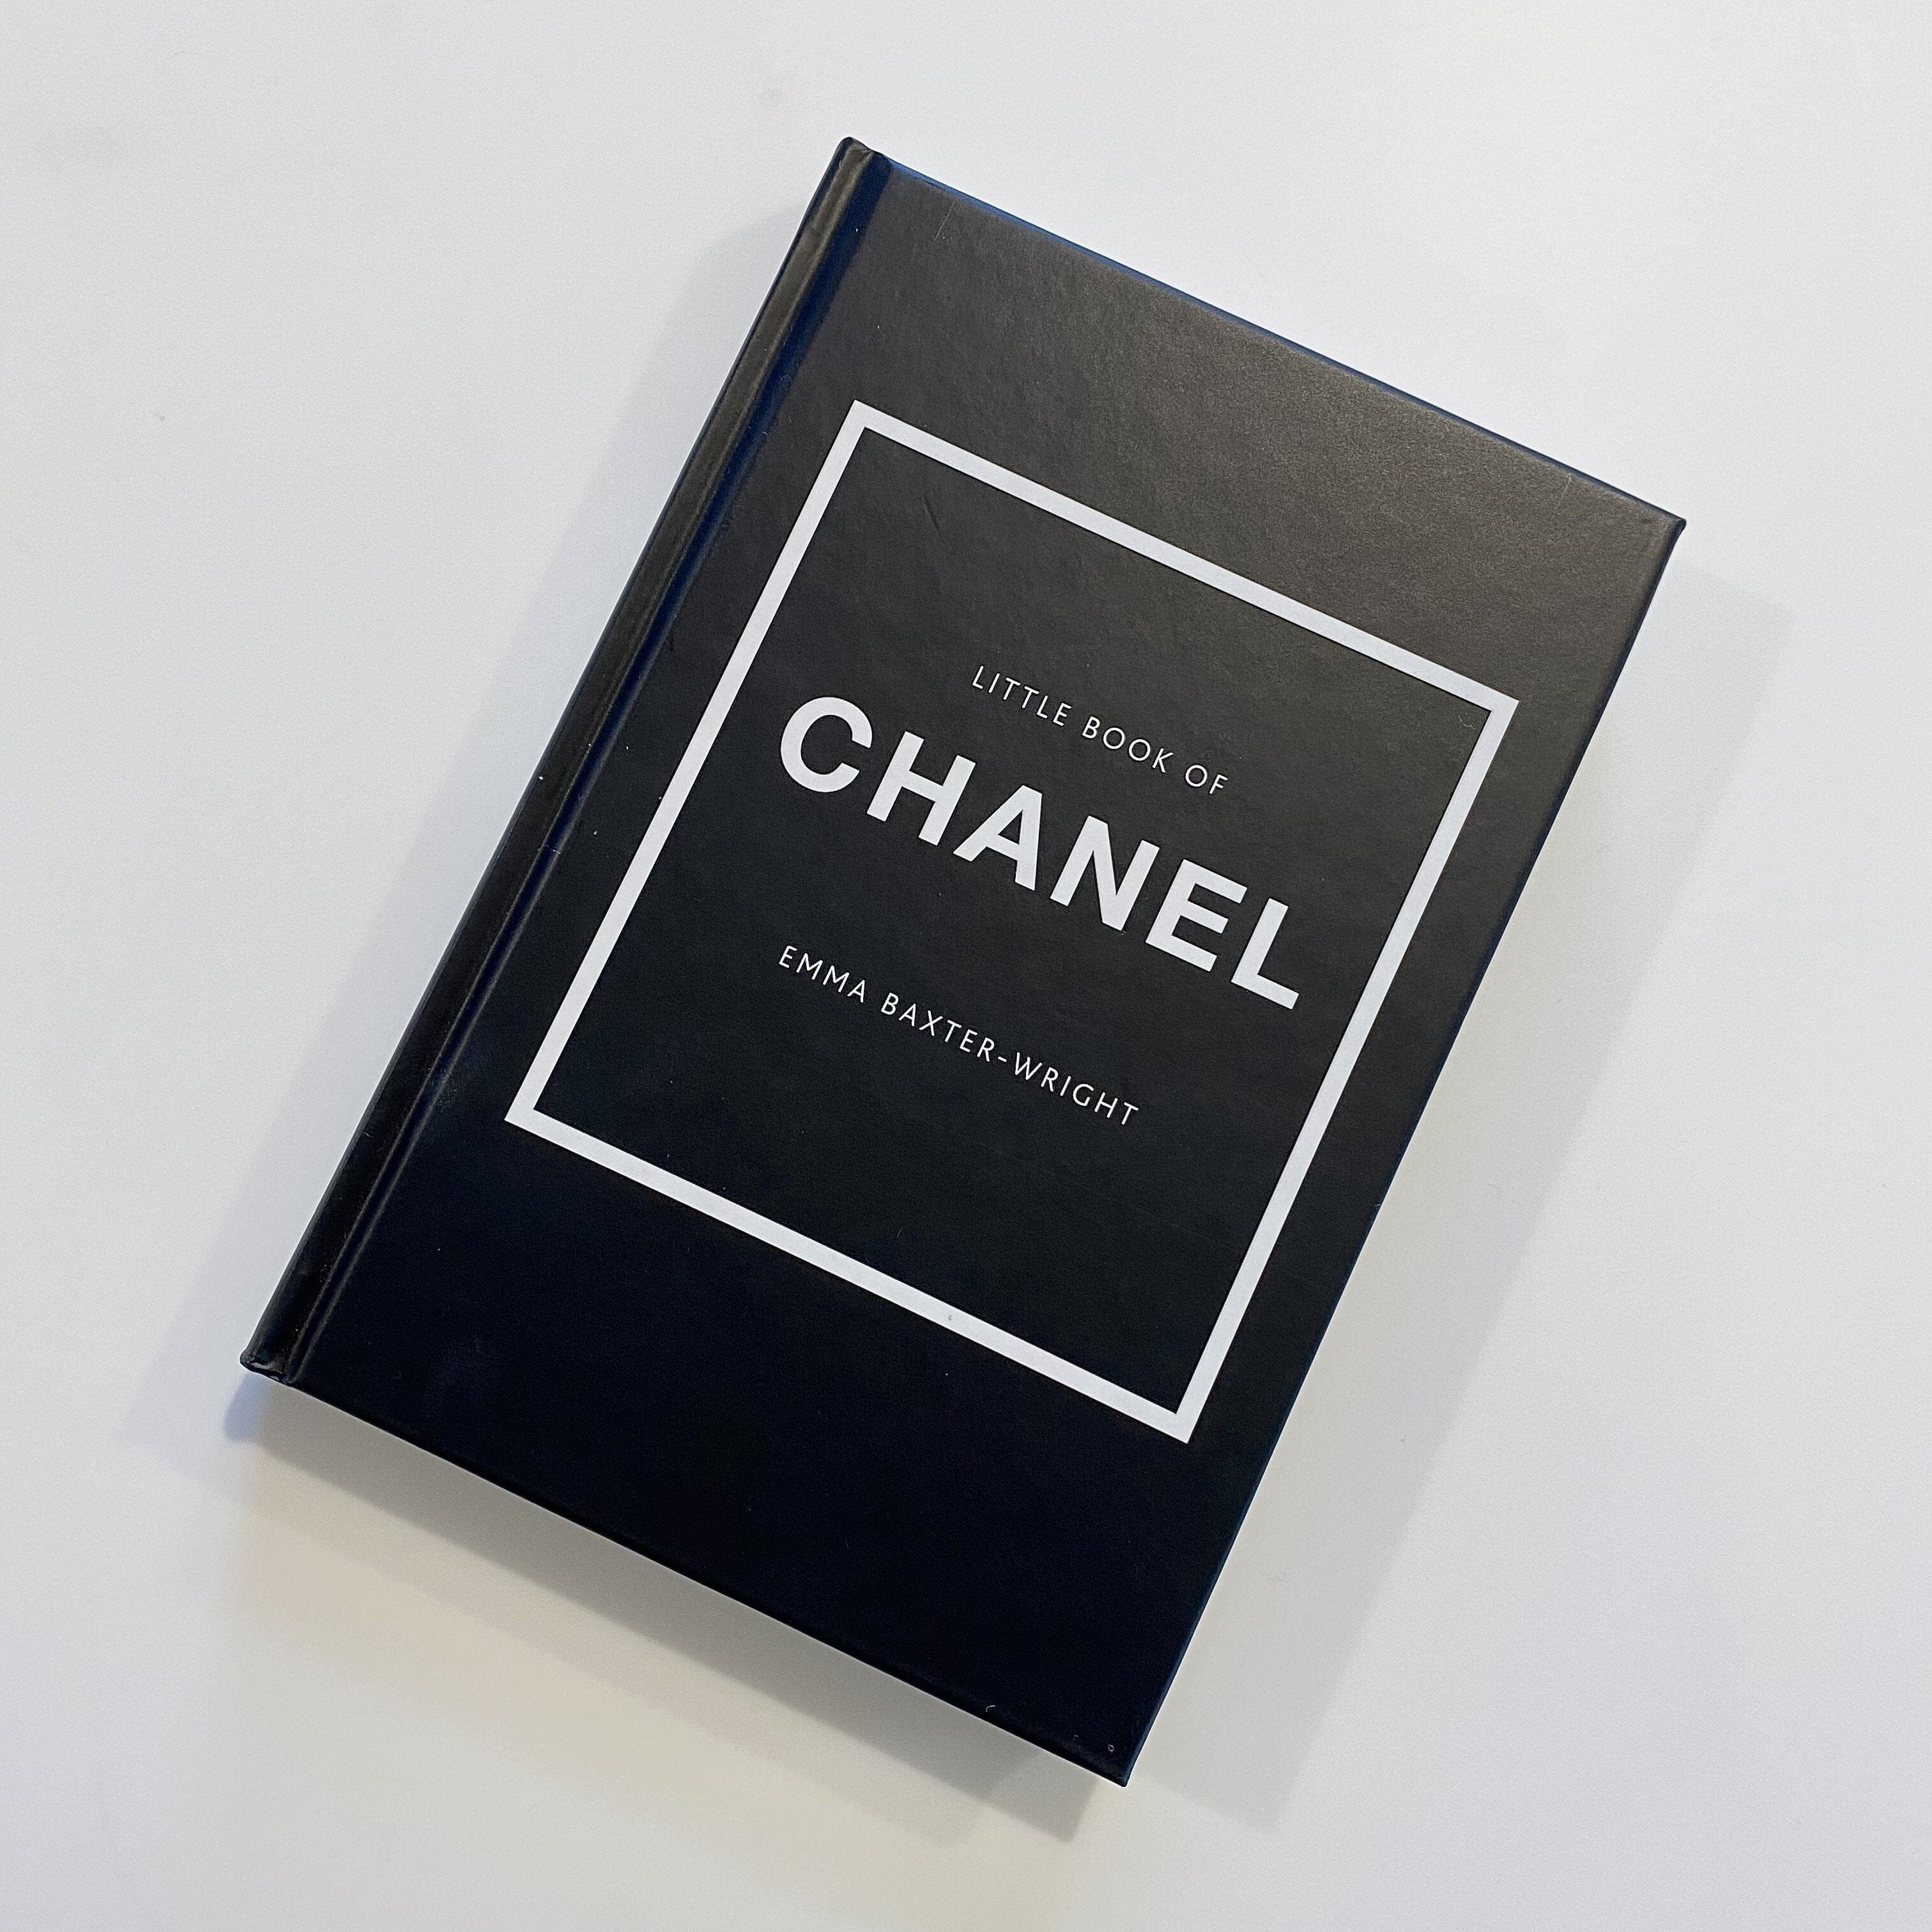 Little Book of Chanel (Little Book of Fashion) - Emma Baxter-Wright -  Design Kitapları